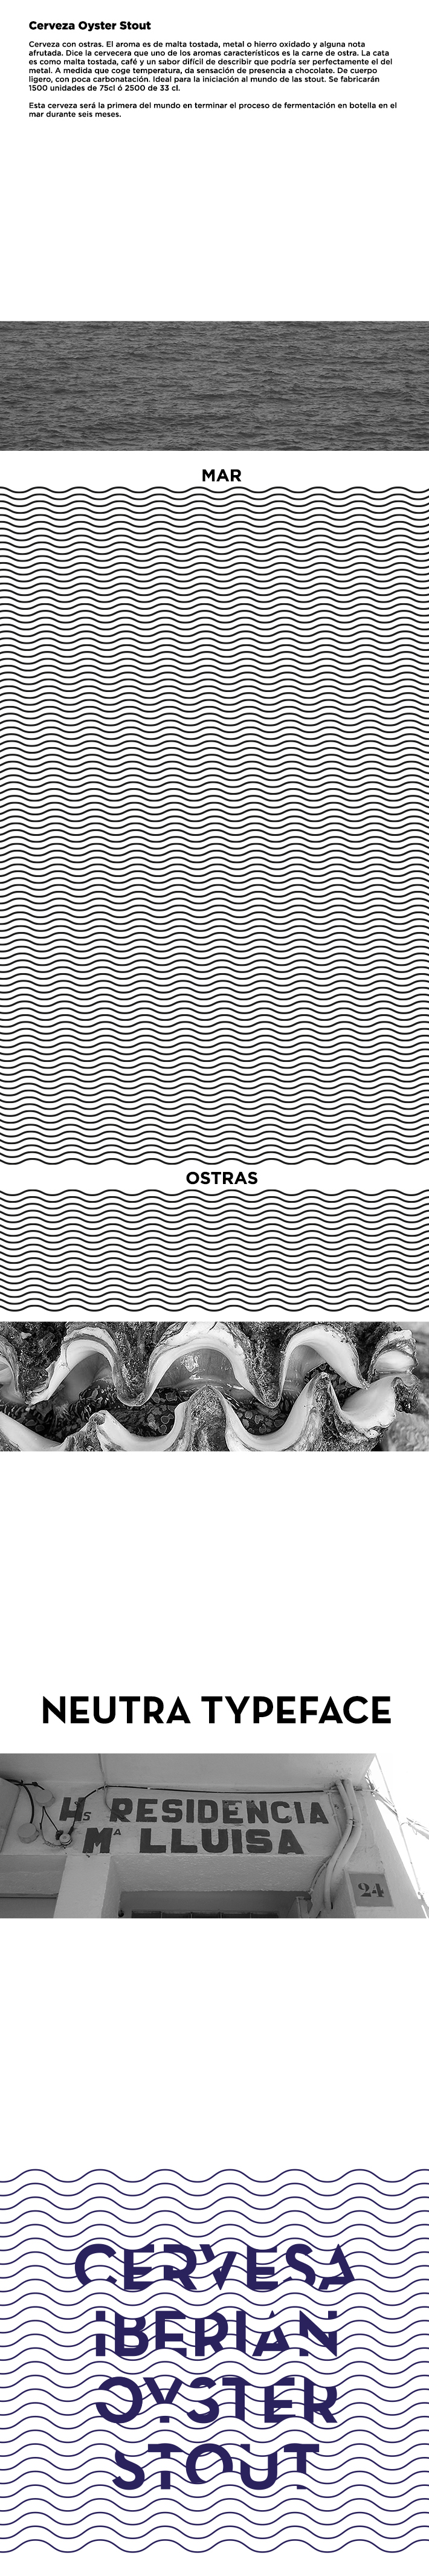 Typeface beer water sea barcelona oyster Bier lettering modular geometry drink type pattern